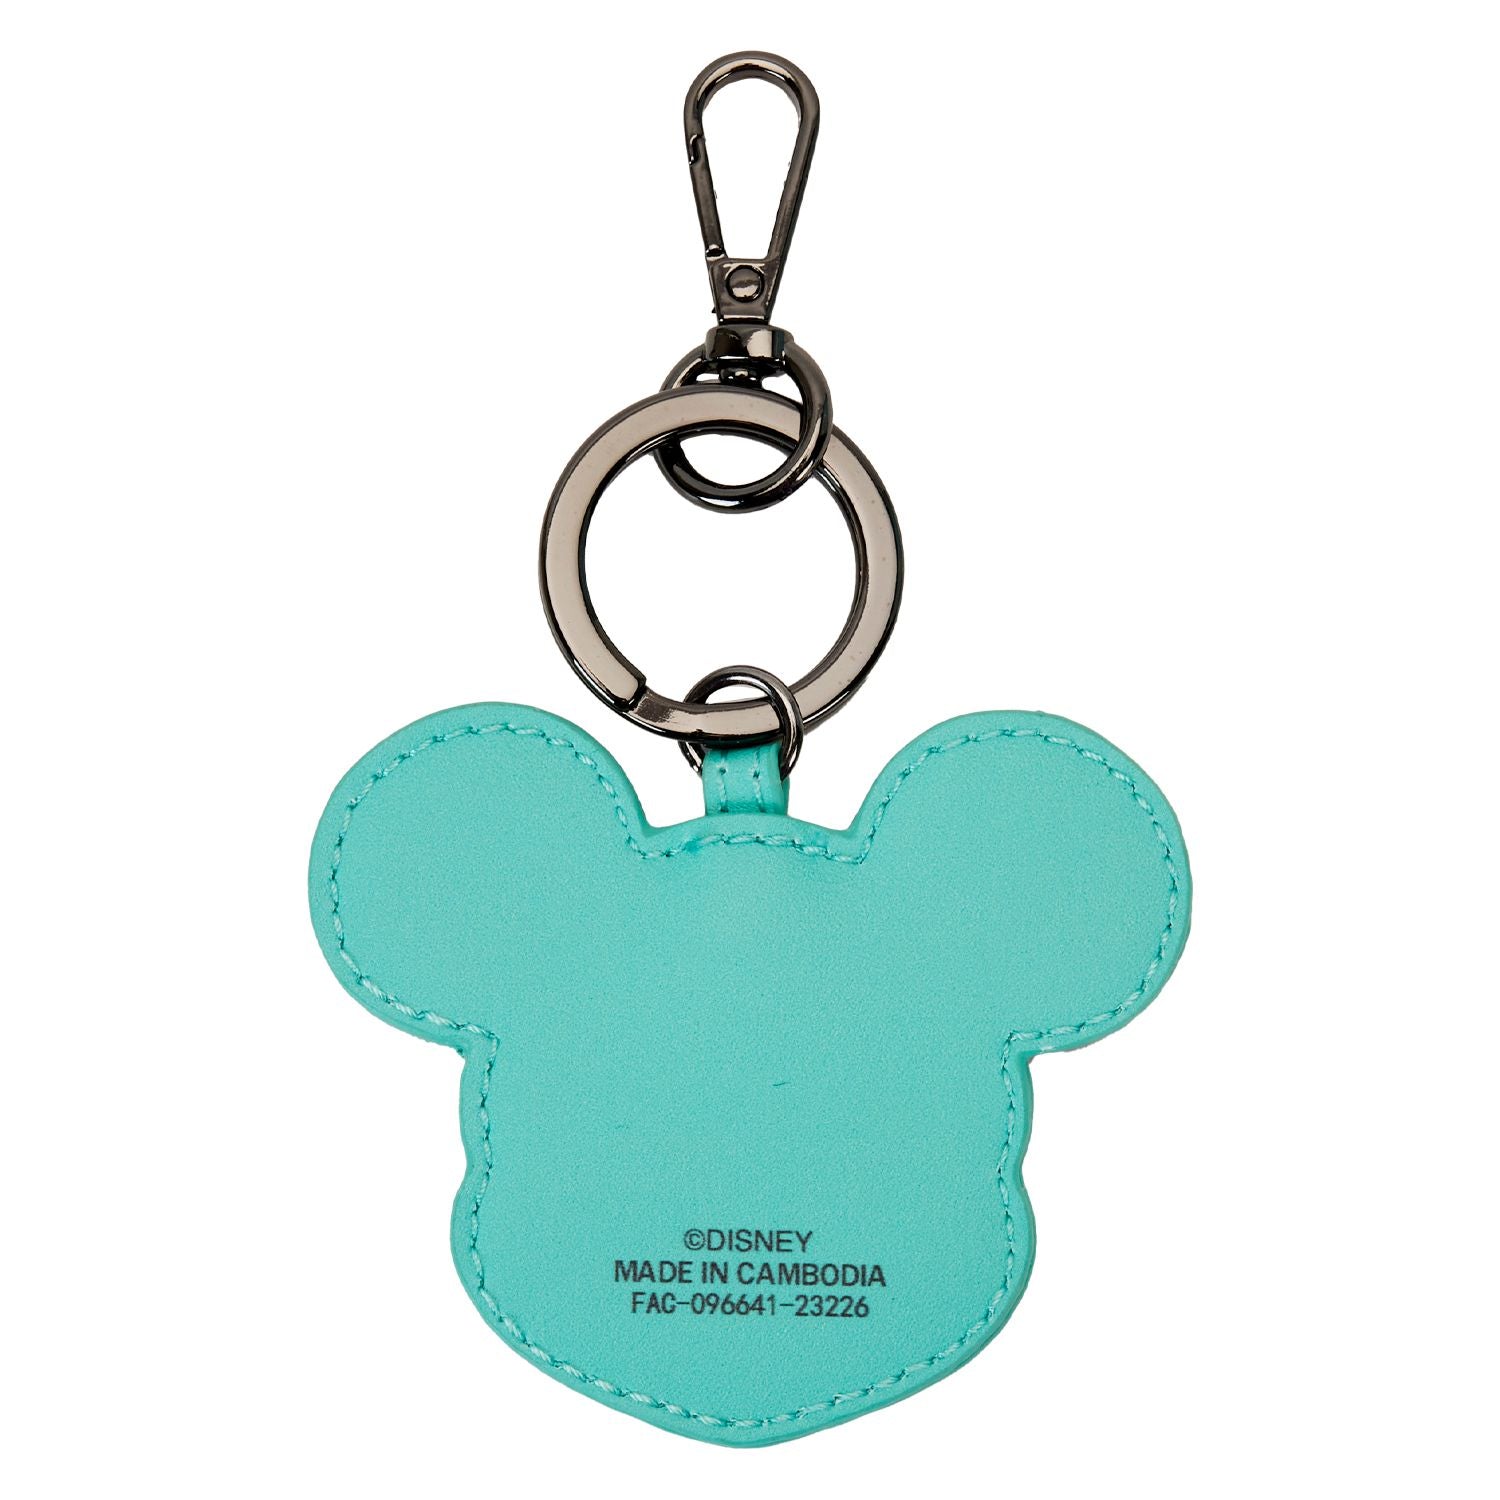 Disney Keychain - Mickey Mouse Coin Purse